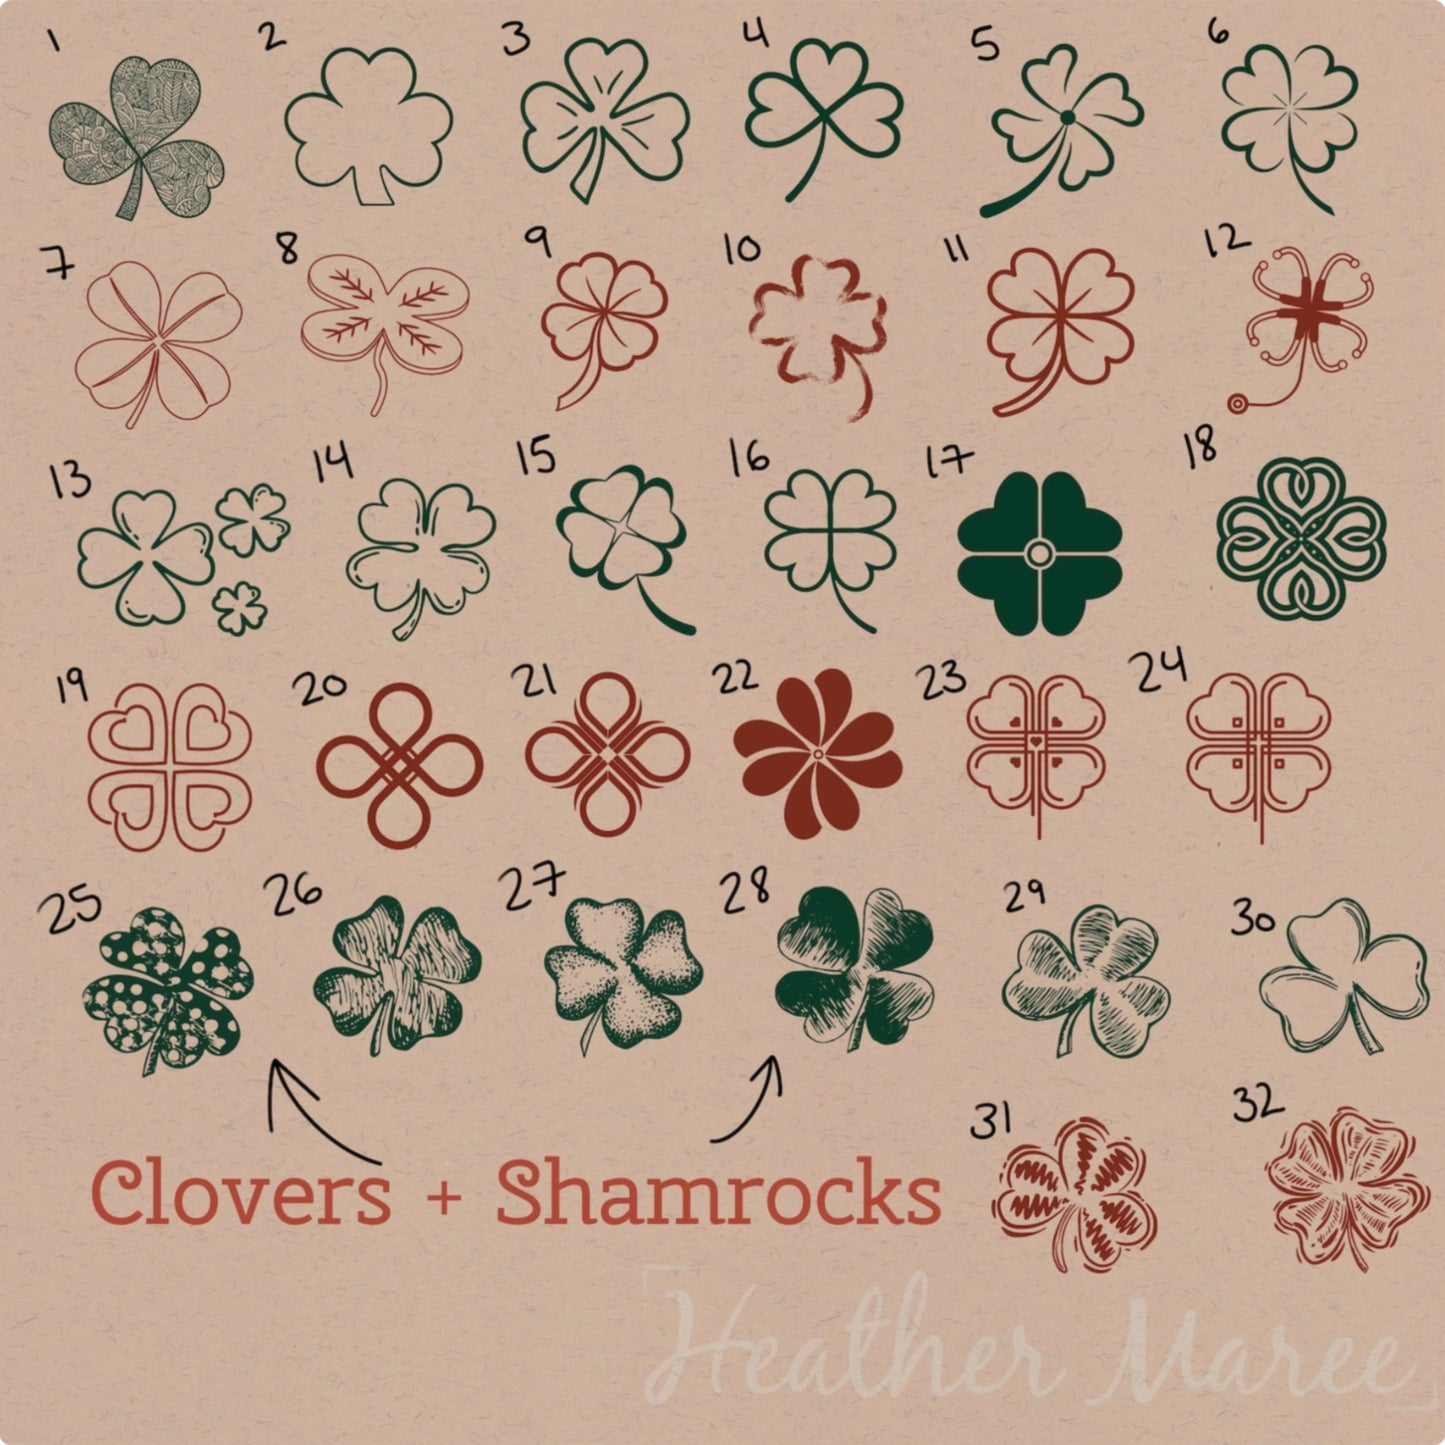 Shamrocks and Clovers | Procreate Stamp Brushes